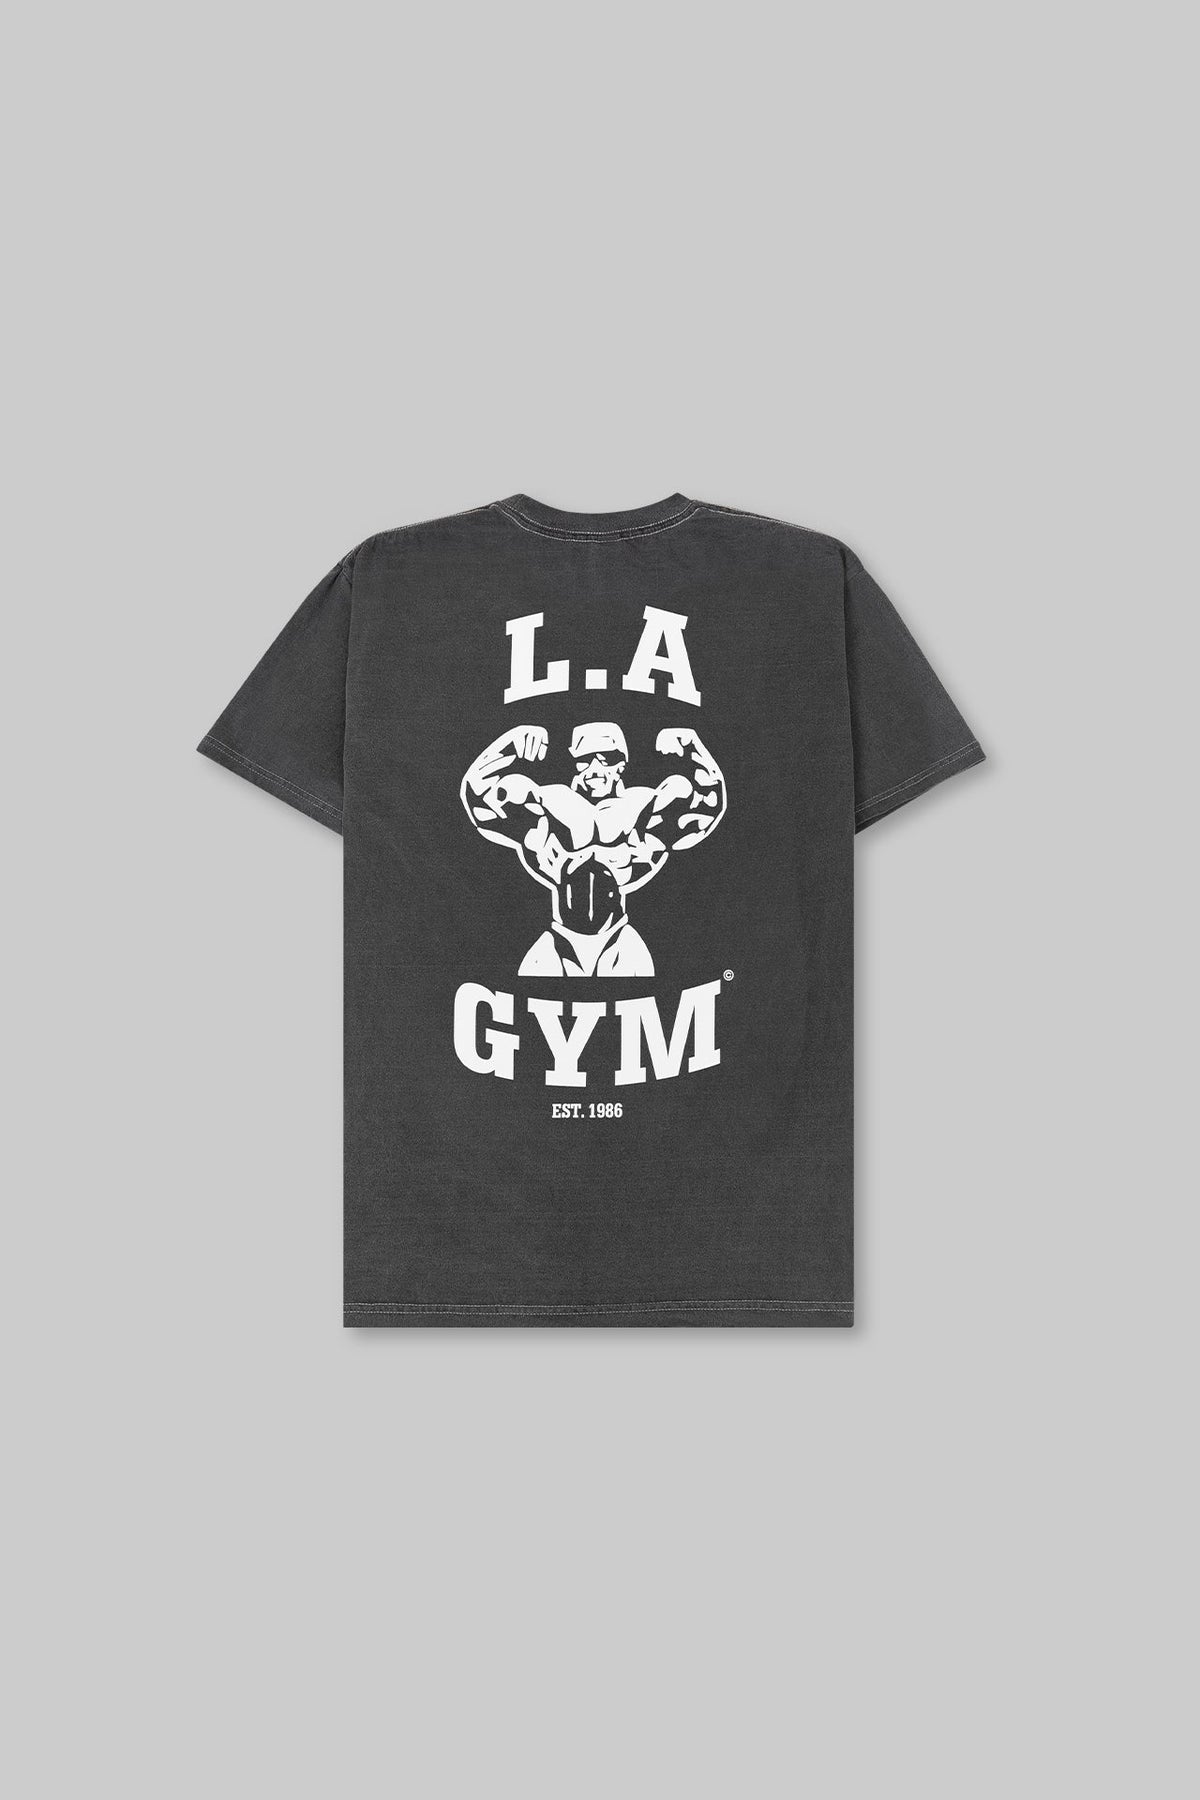 L.A Gym Official Tee Retro Black & Vintage White – Chosen Few Athletics